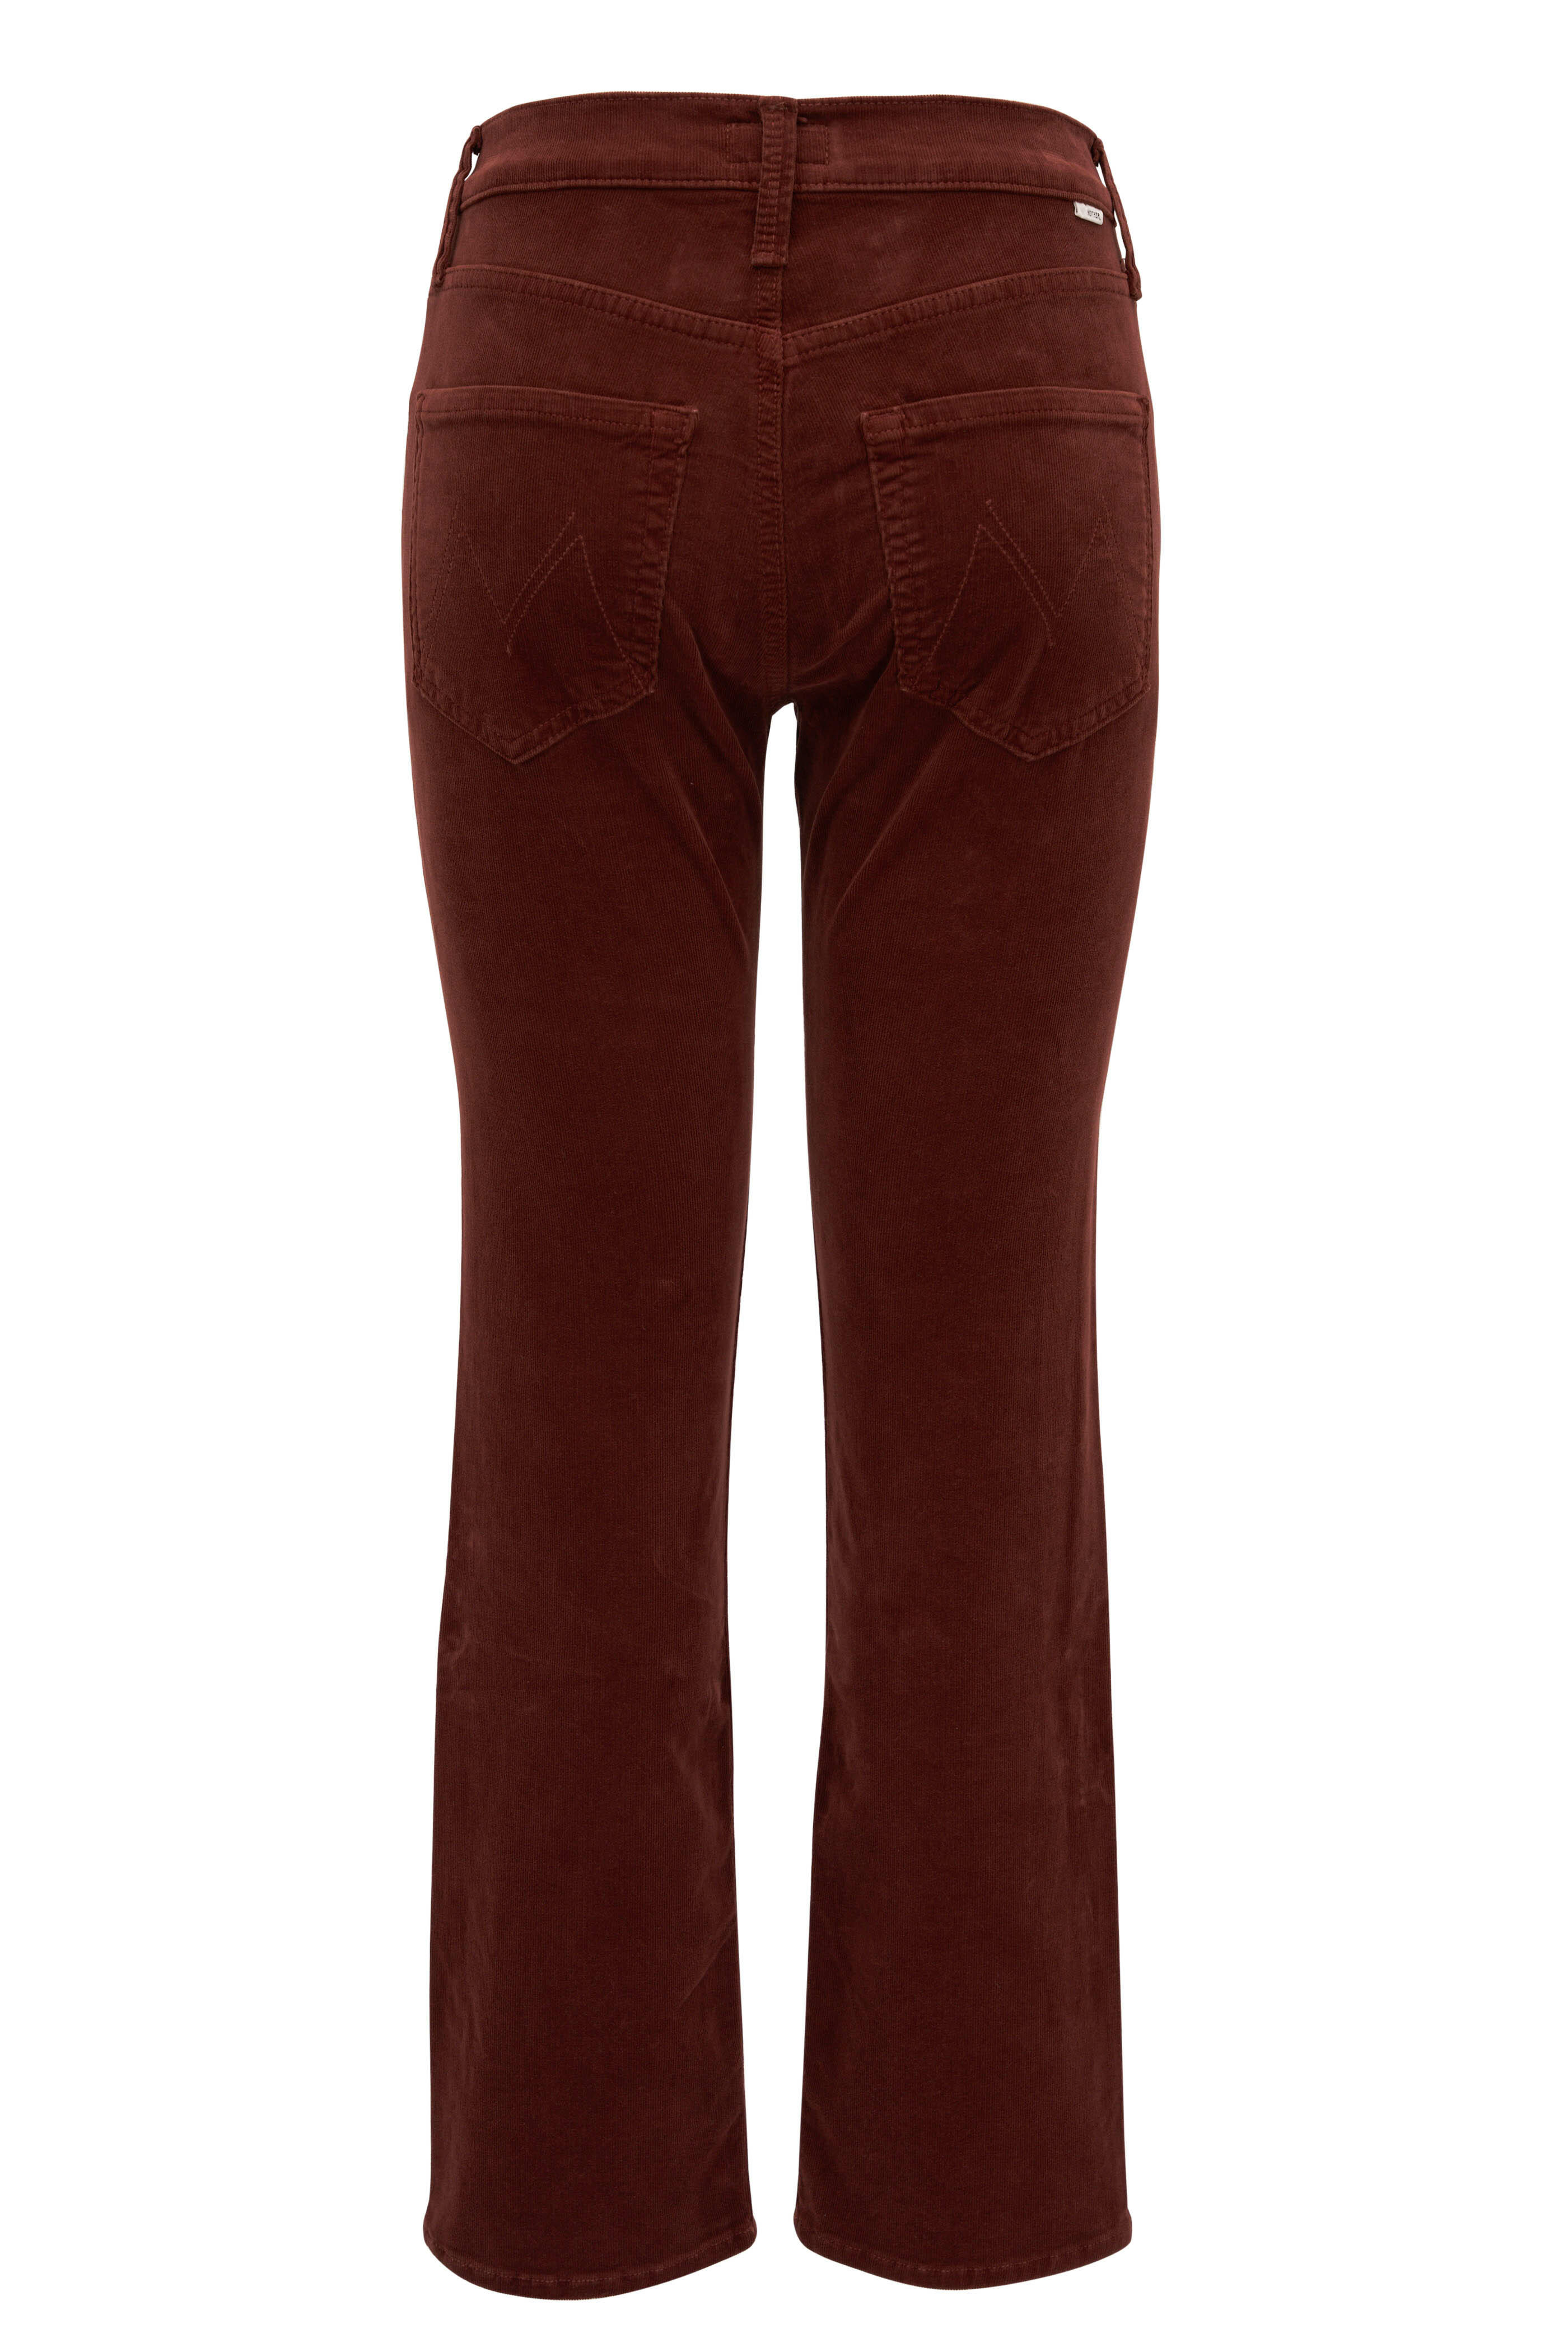 Women's High-Rise Corduroy Wide Leg Jeans - Universal Thread™ Brown 14